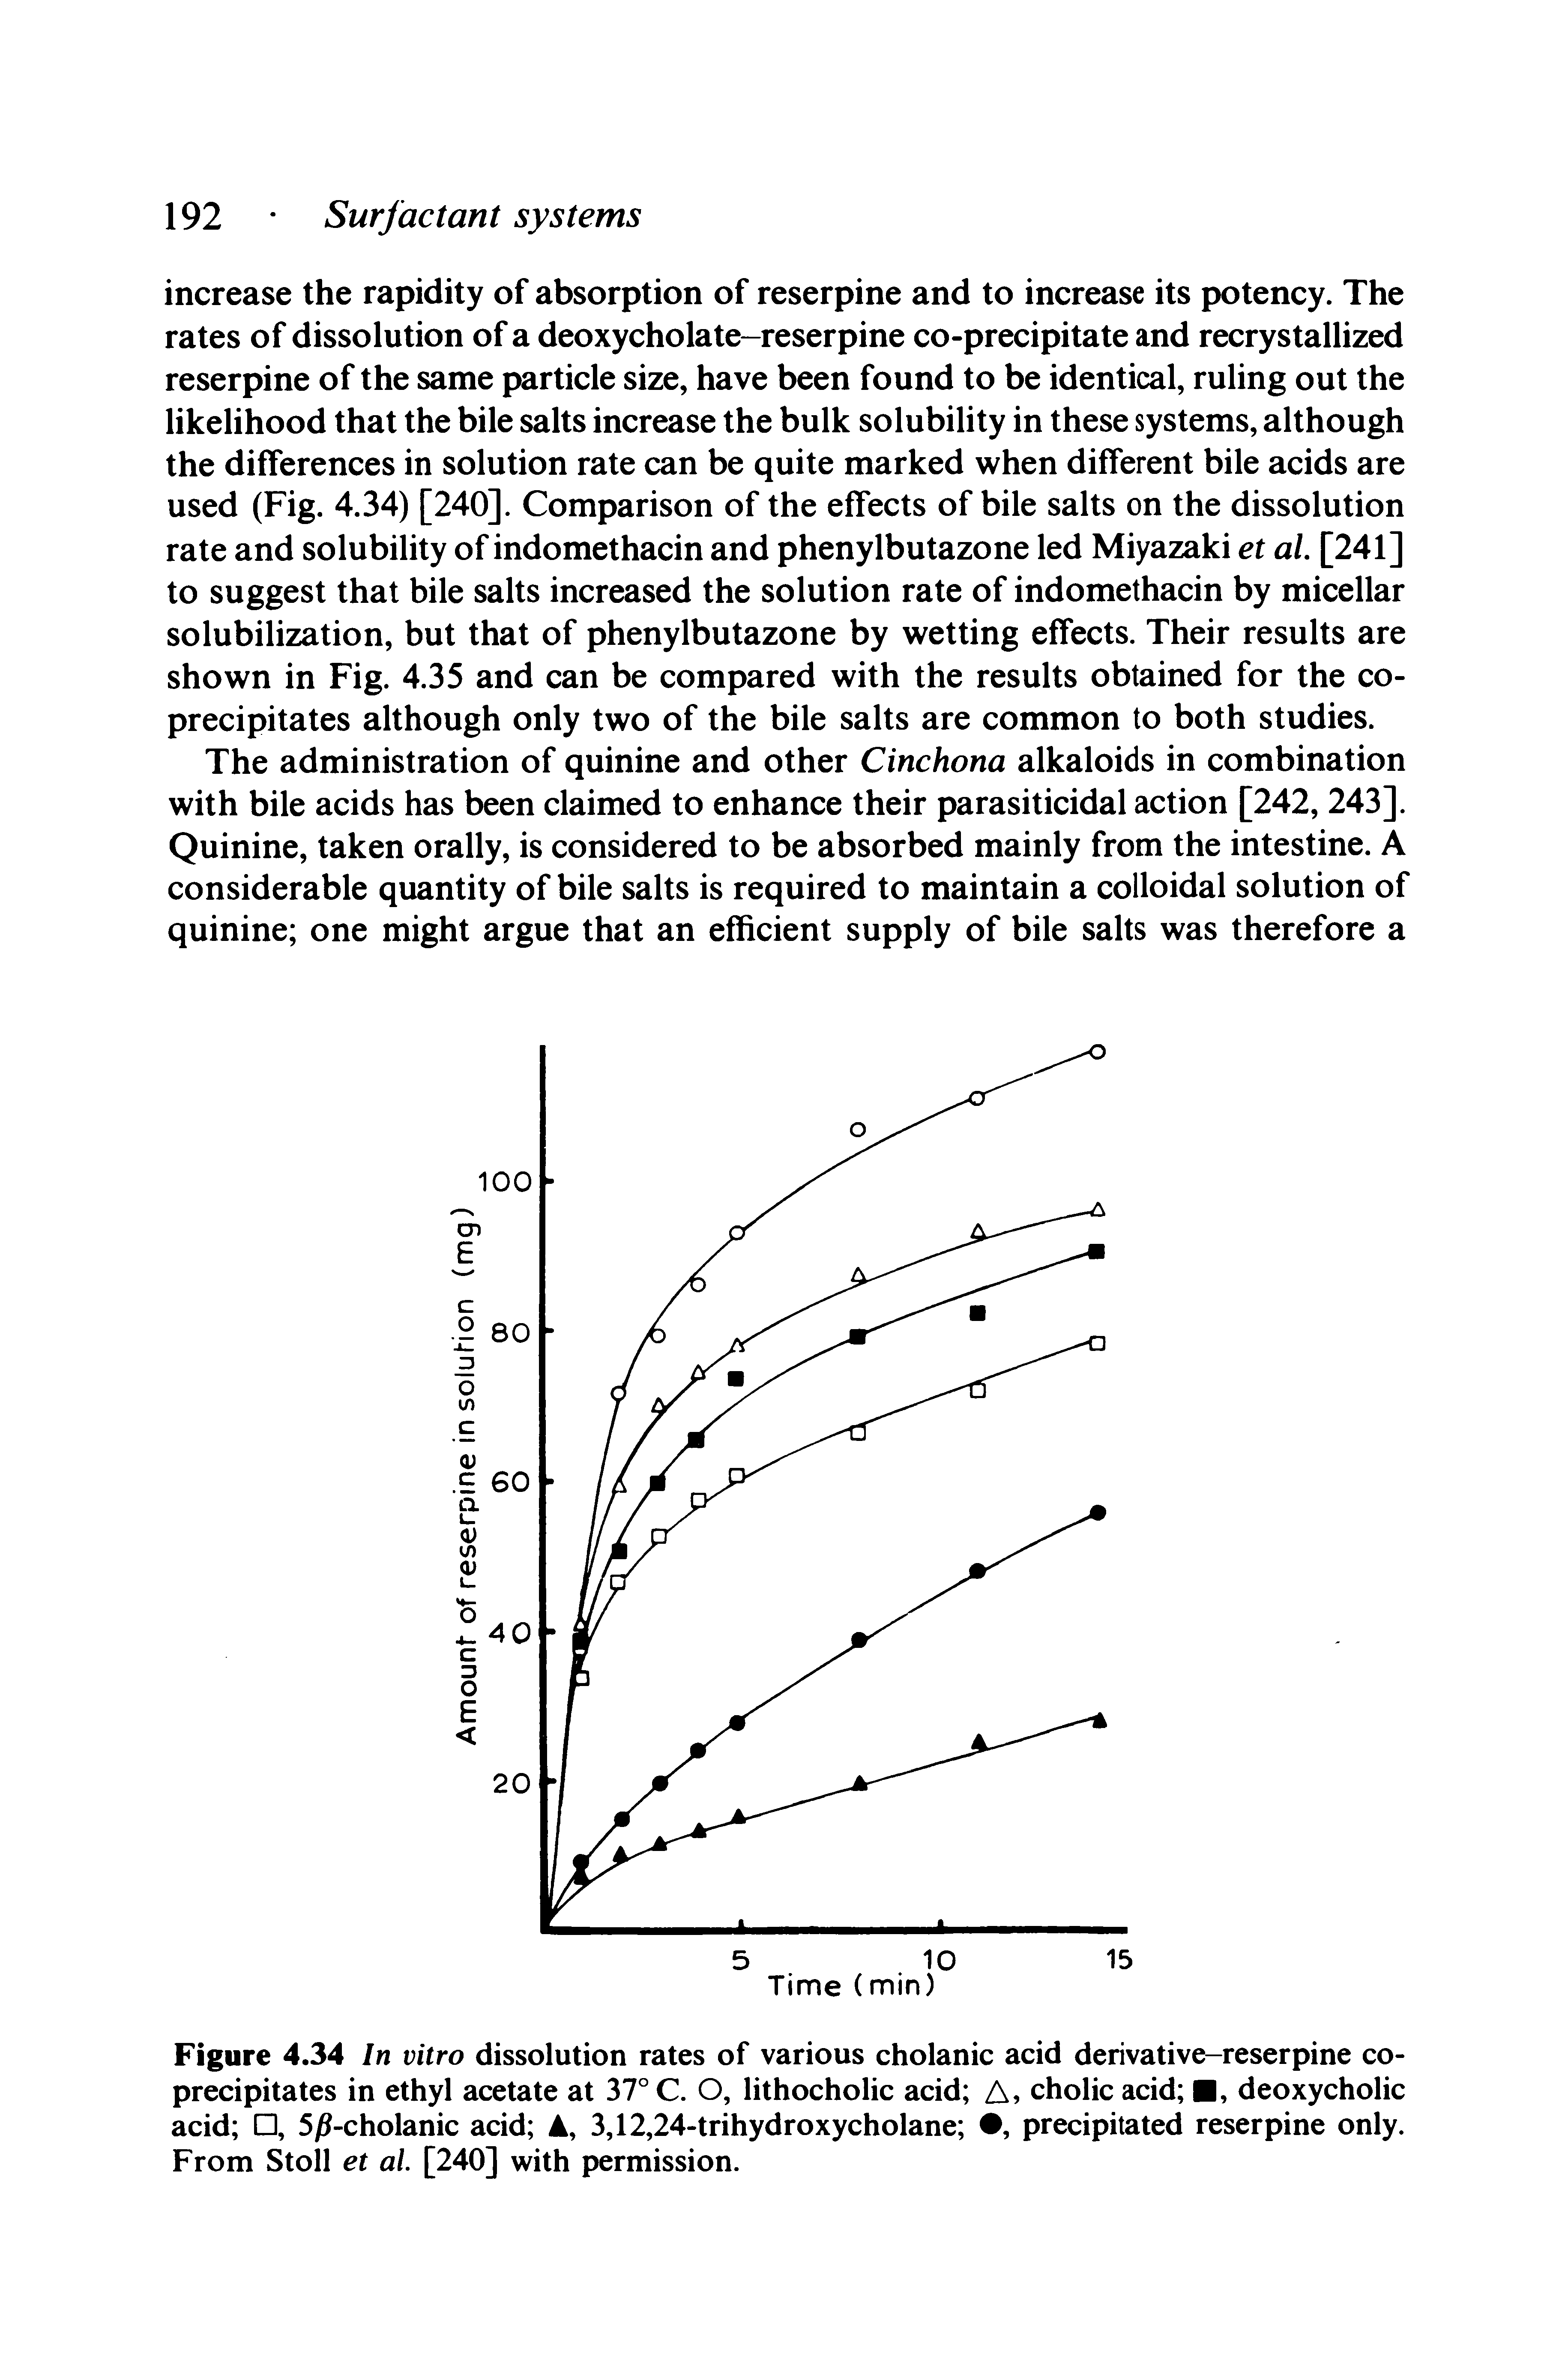 Figure 4.34 In vitro dissolution rates of various cholanic acid derivative-reserpine coprecipitates in ethyl acetate at 37° C. O, lithocholic acid A cholic acid , deoxycholic acid , 5)9-cholanic acid A, 3,12,24-trihydroxycholane , precipitated reserpine only. From Stoll et al. [240] with permission.